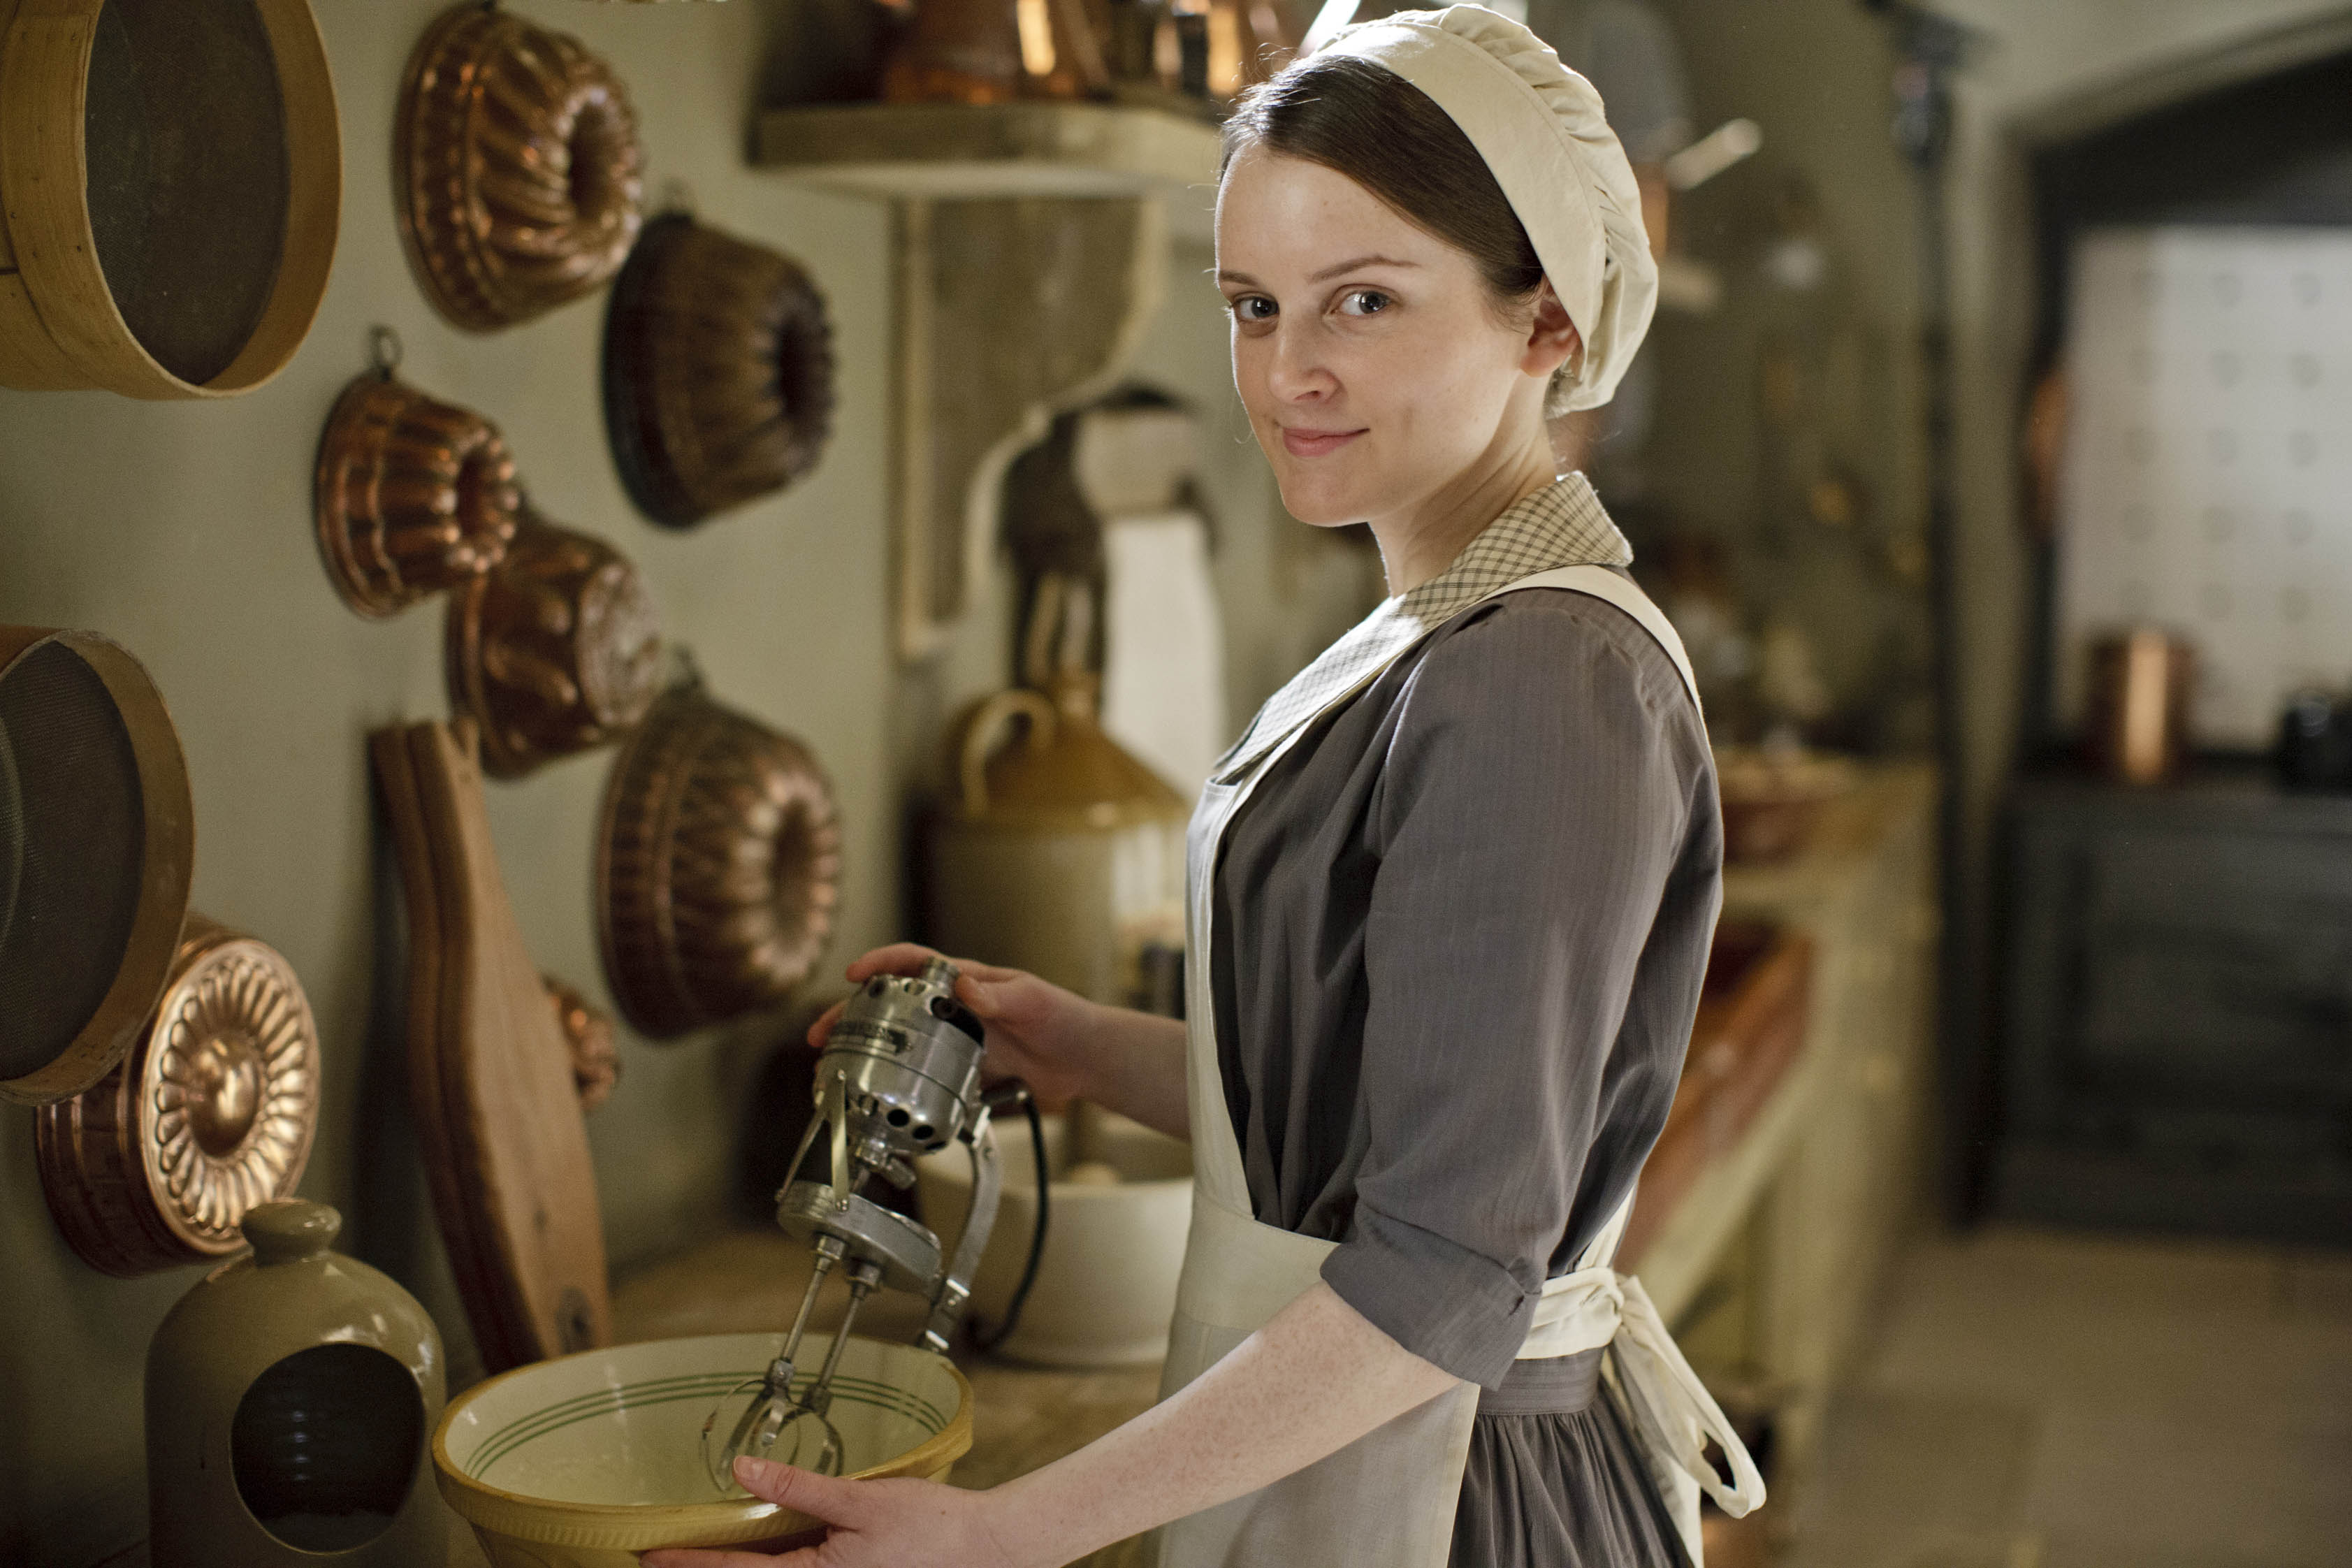 Sophie McShera as Daisy Mason in Series 4 of Downton Abbey.